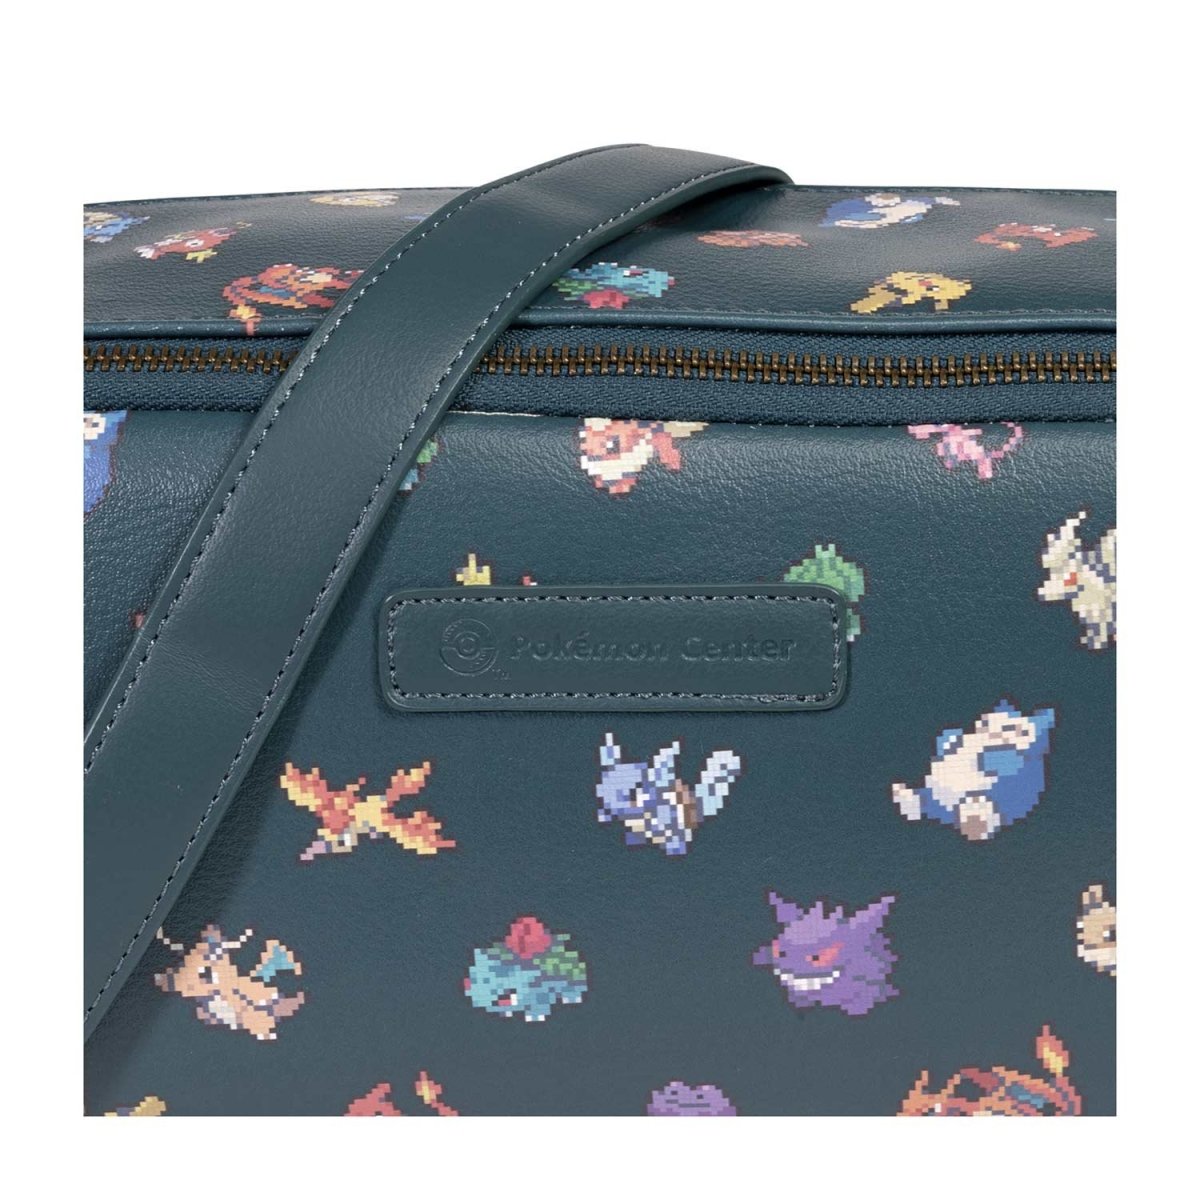 Pin on handbags / slings